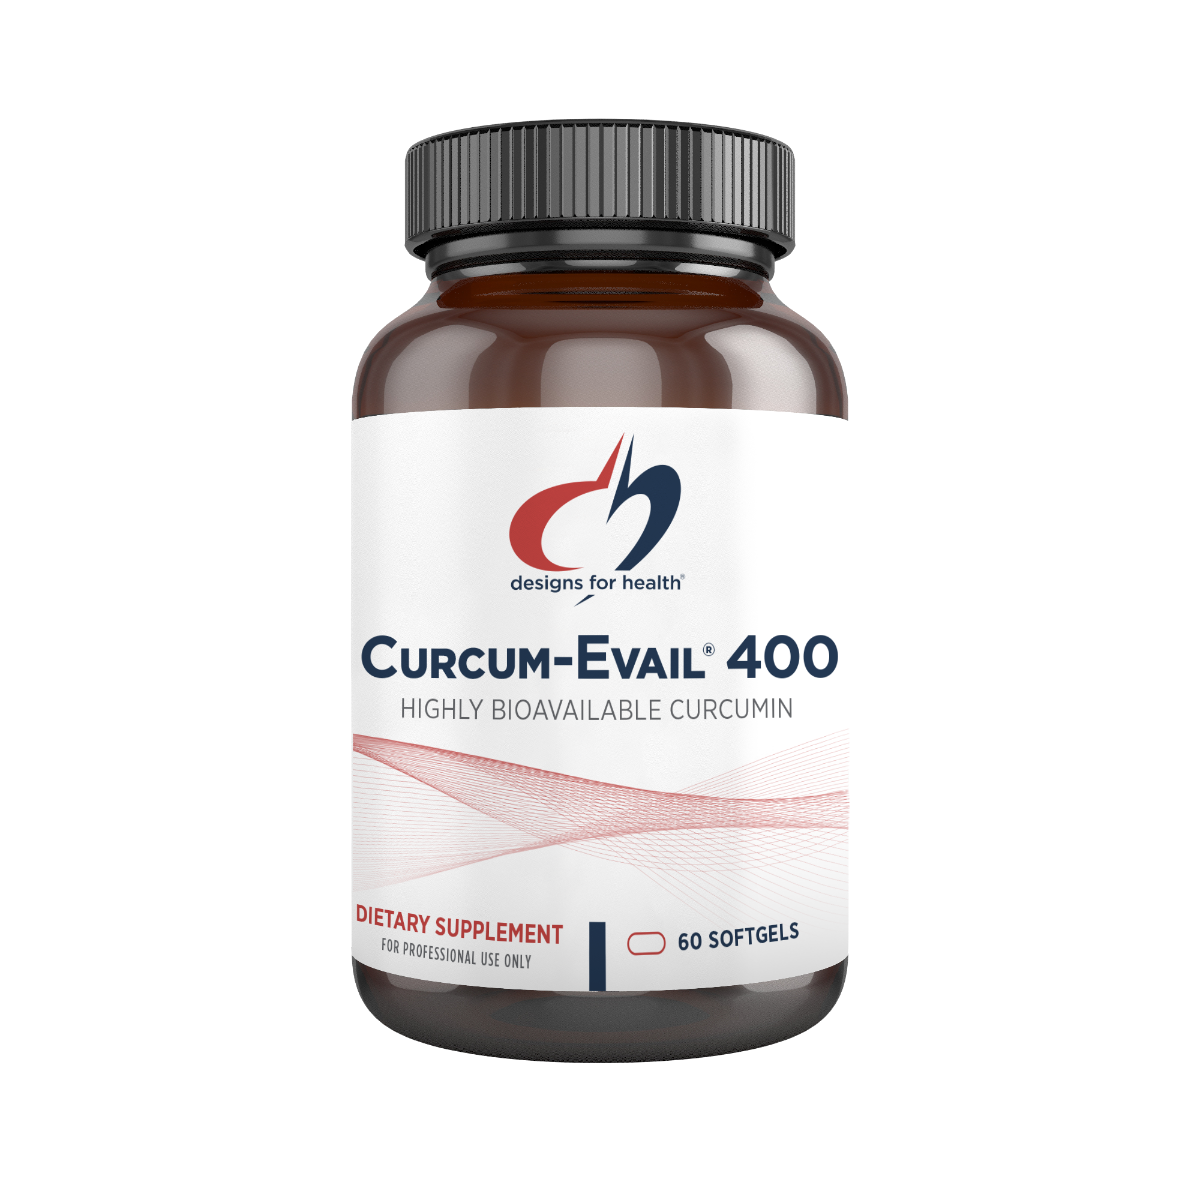 Curcum-Evail 400 - 60 Softgels | Designs For Health